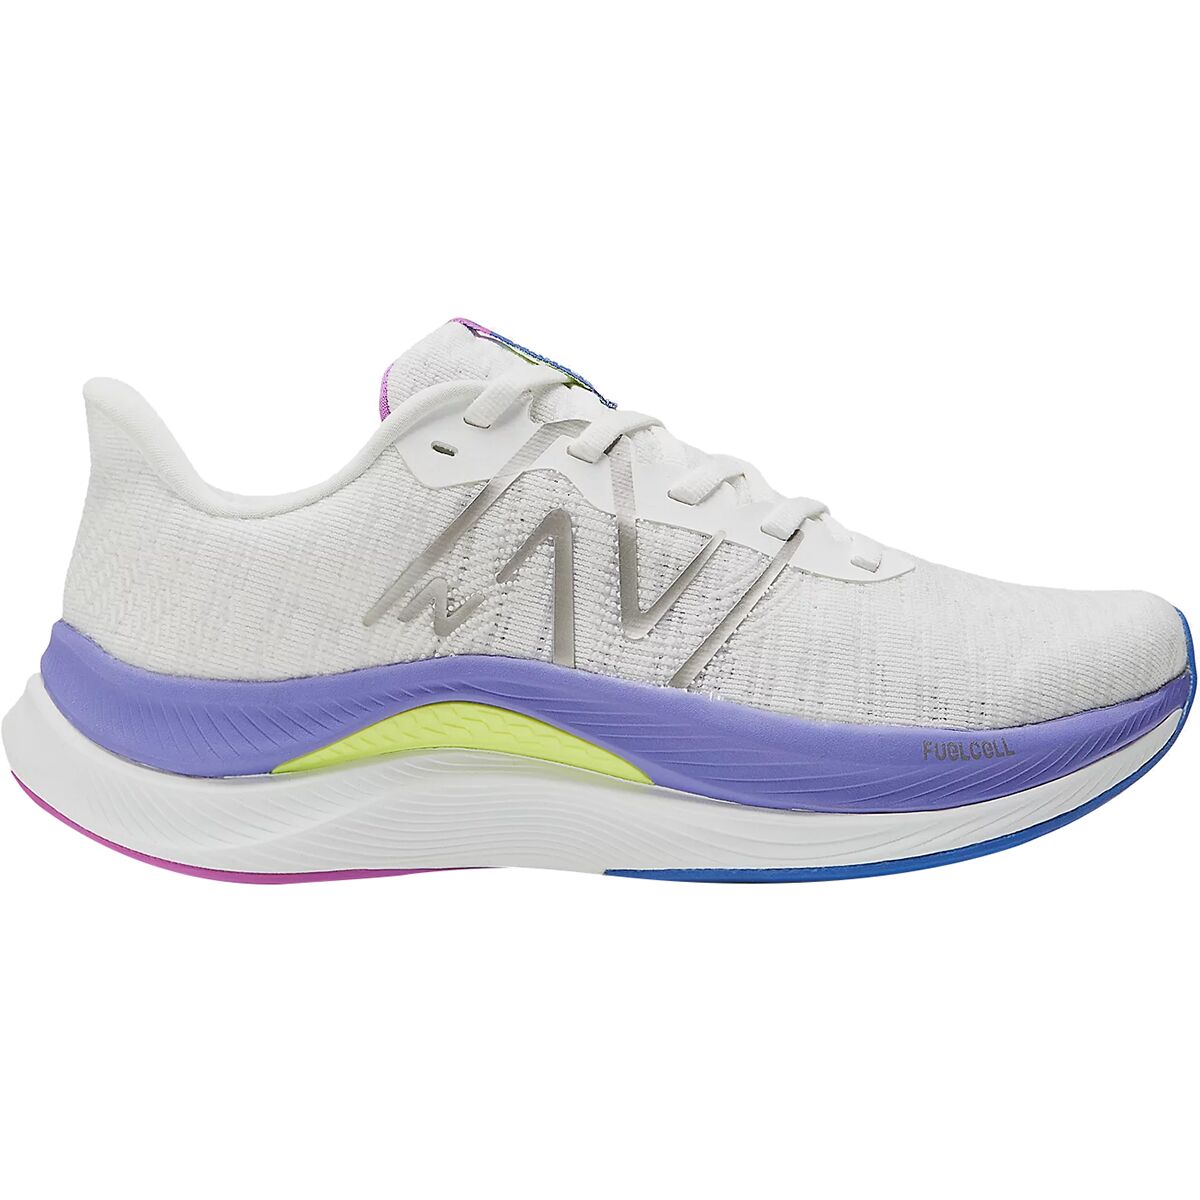 New Balance FuellCell Propel V4 Running Shoe - Women's